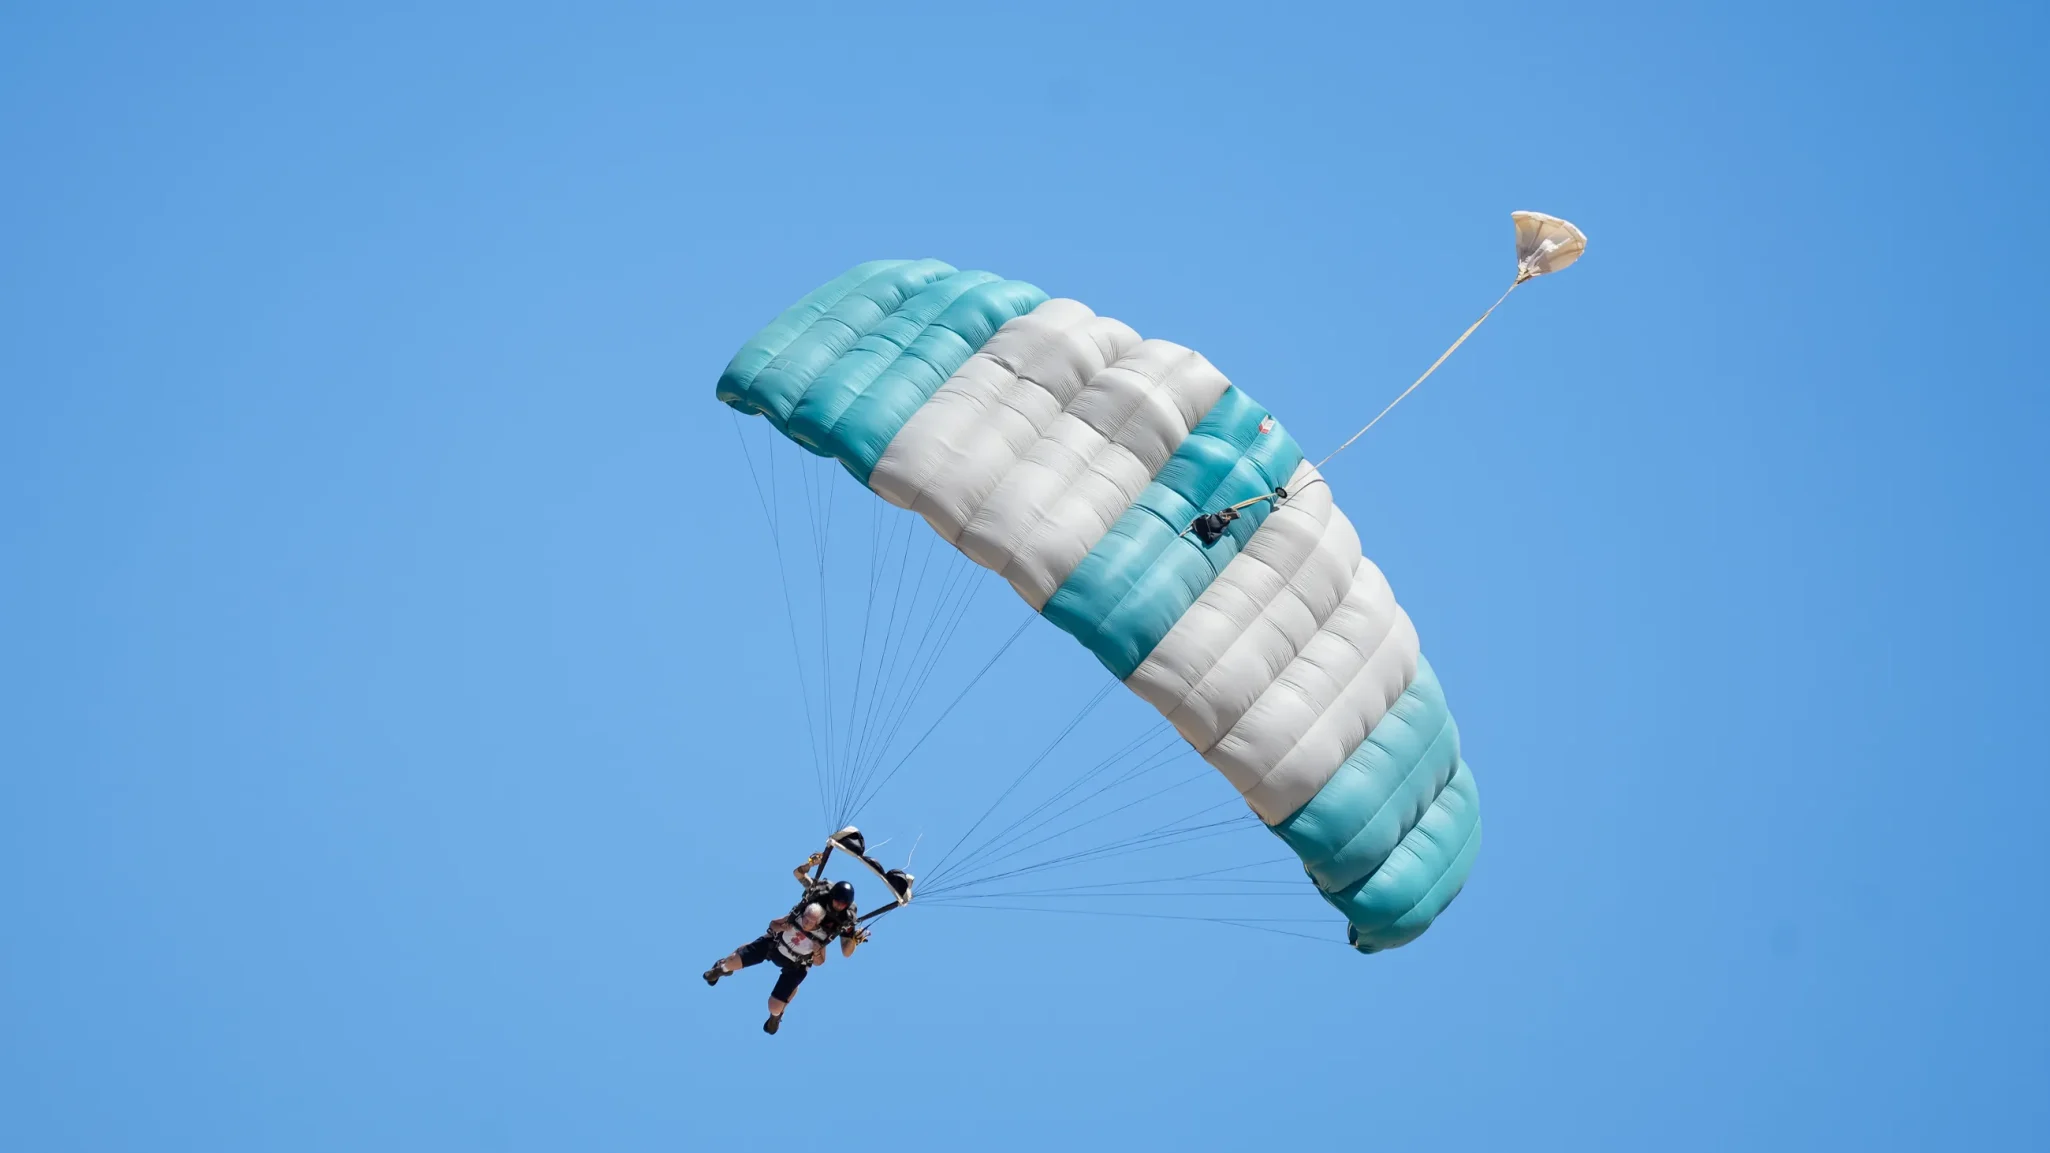 a person parachuting